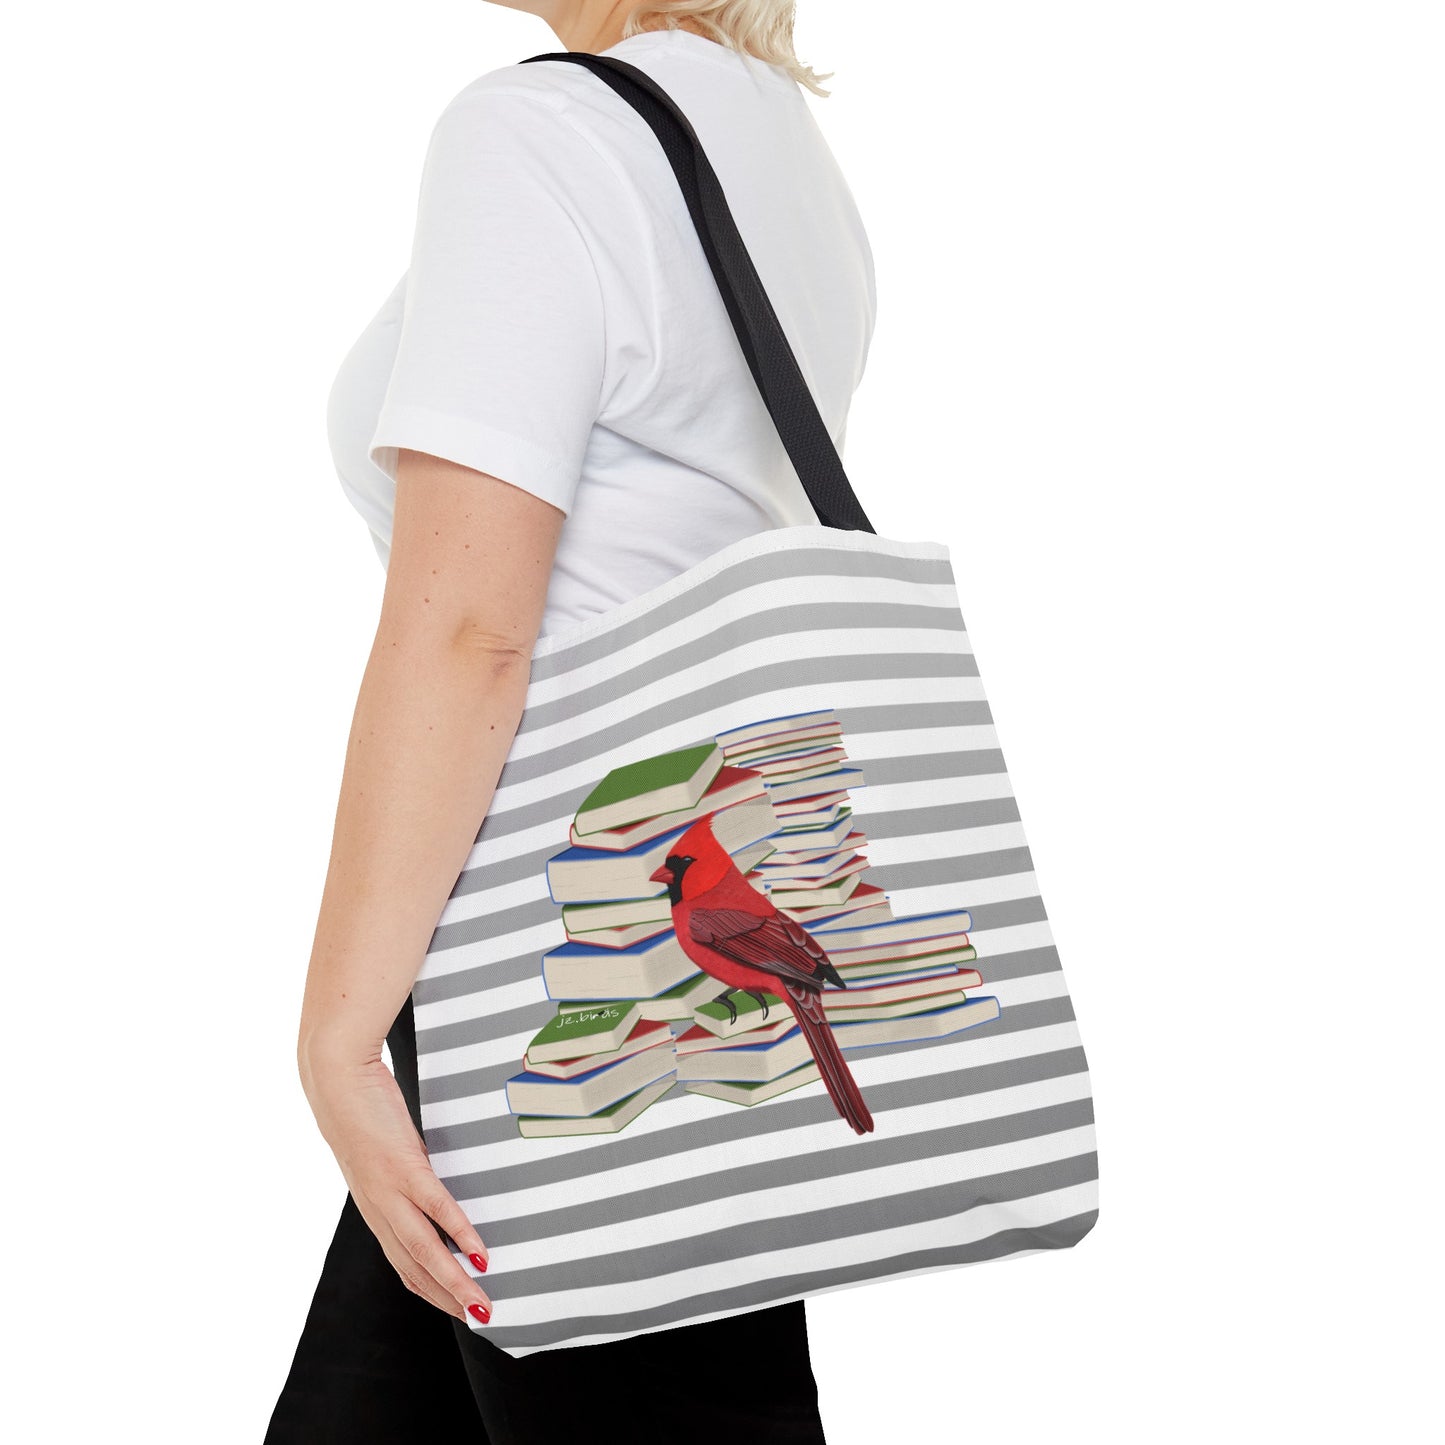 Cardinal Bird and Books Birdlover Bookworm Tote Bag 16"x16"